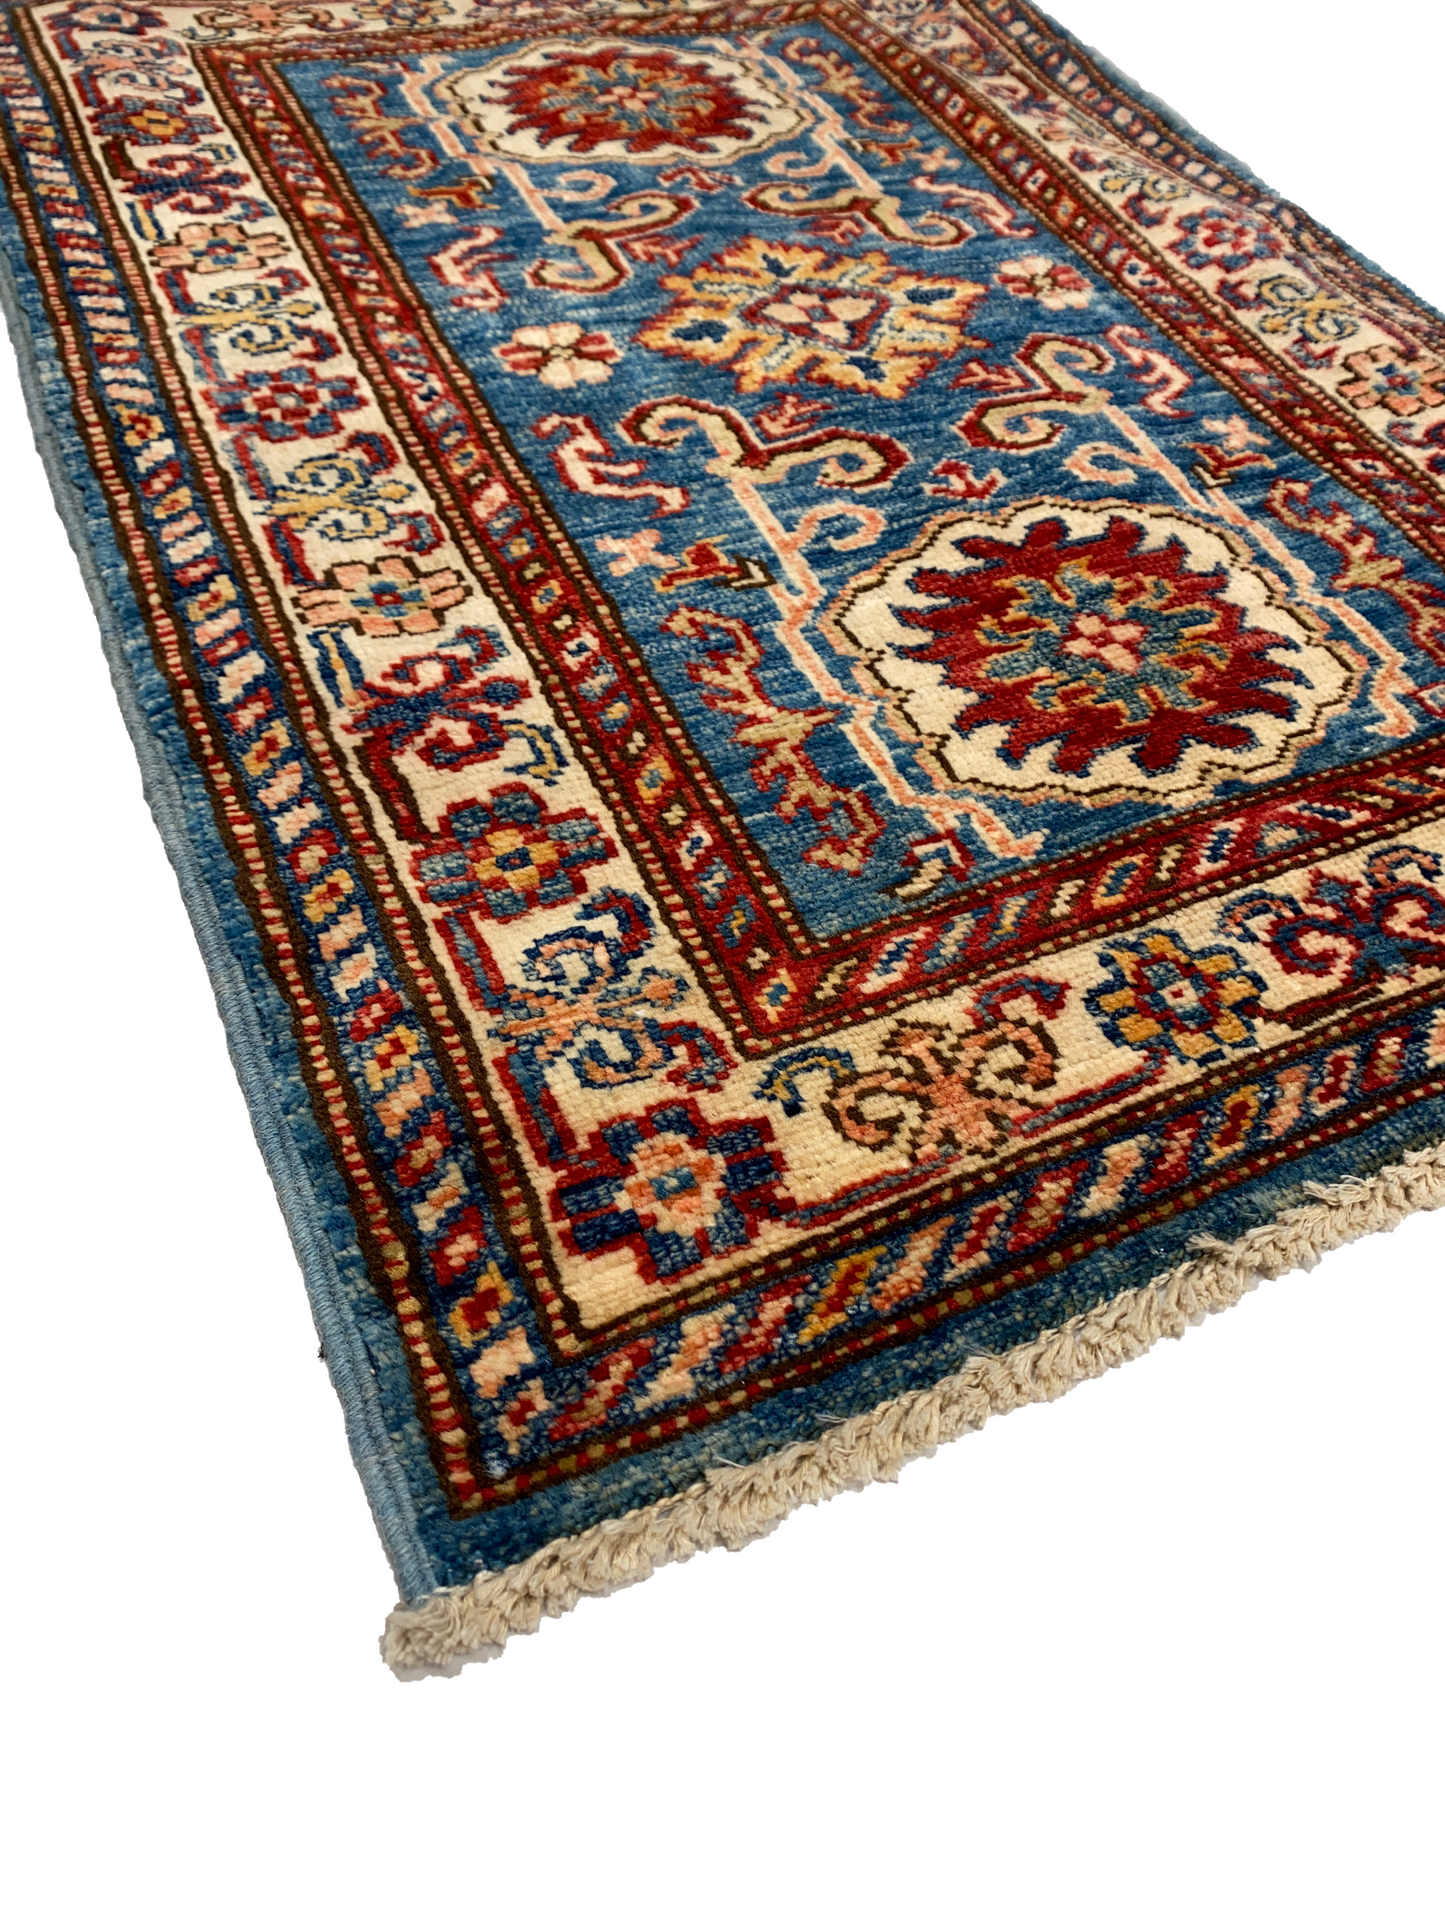 Şirvan Carpet 82 X 60 cm